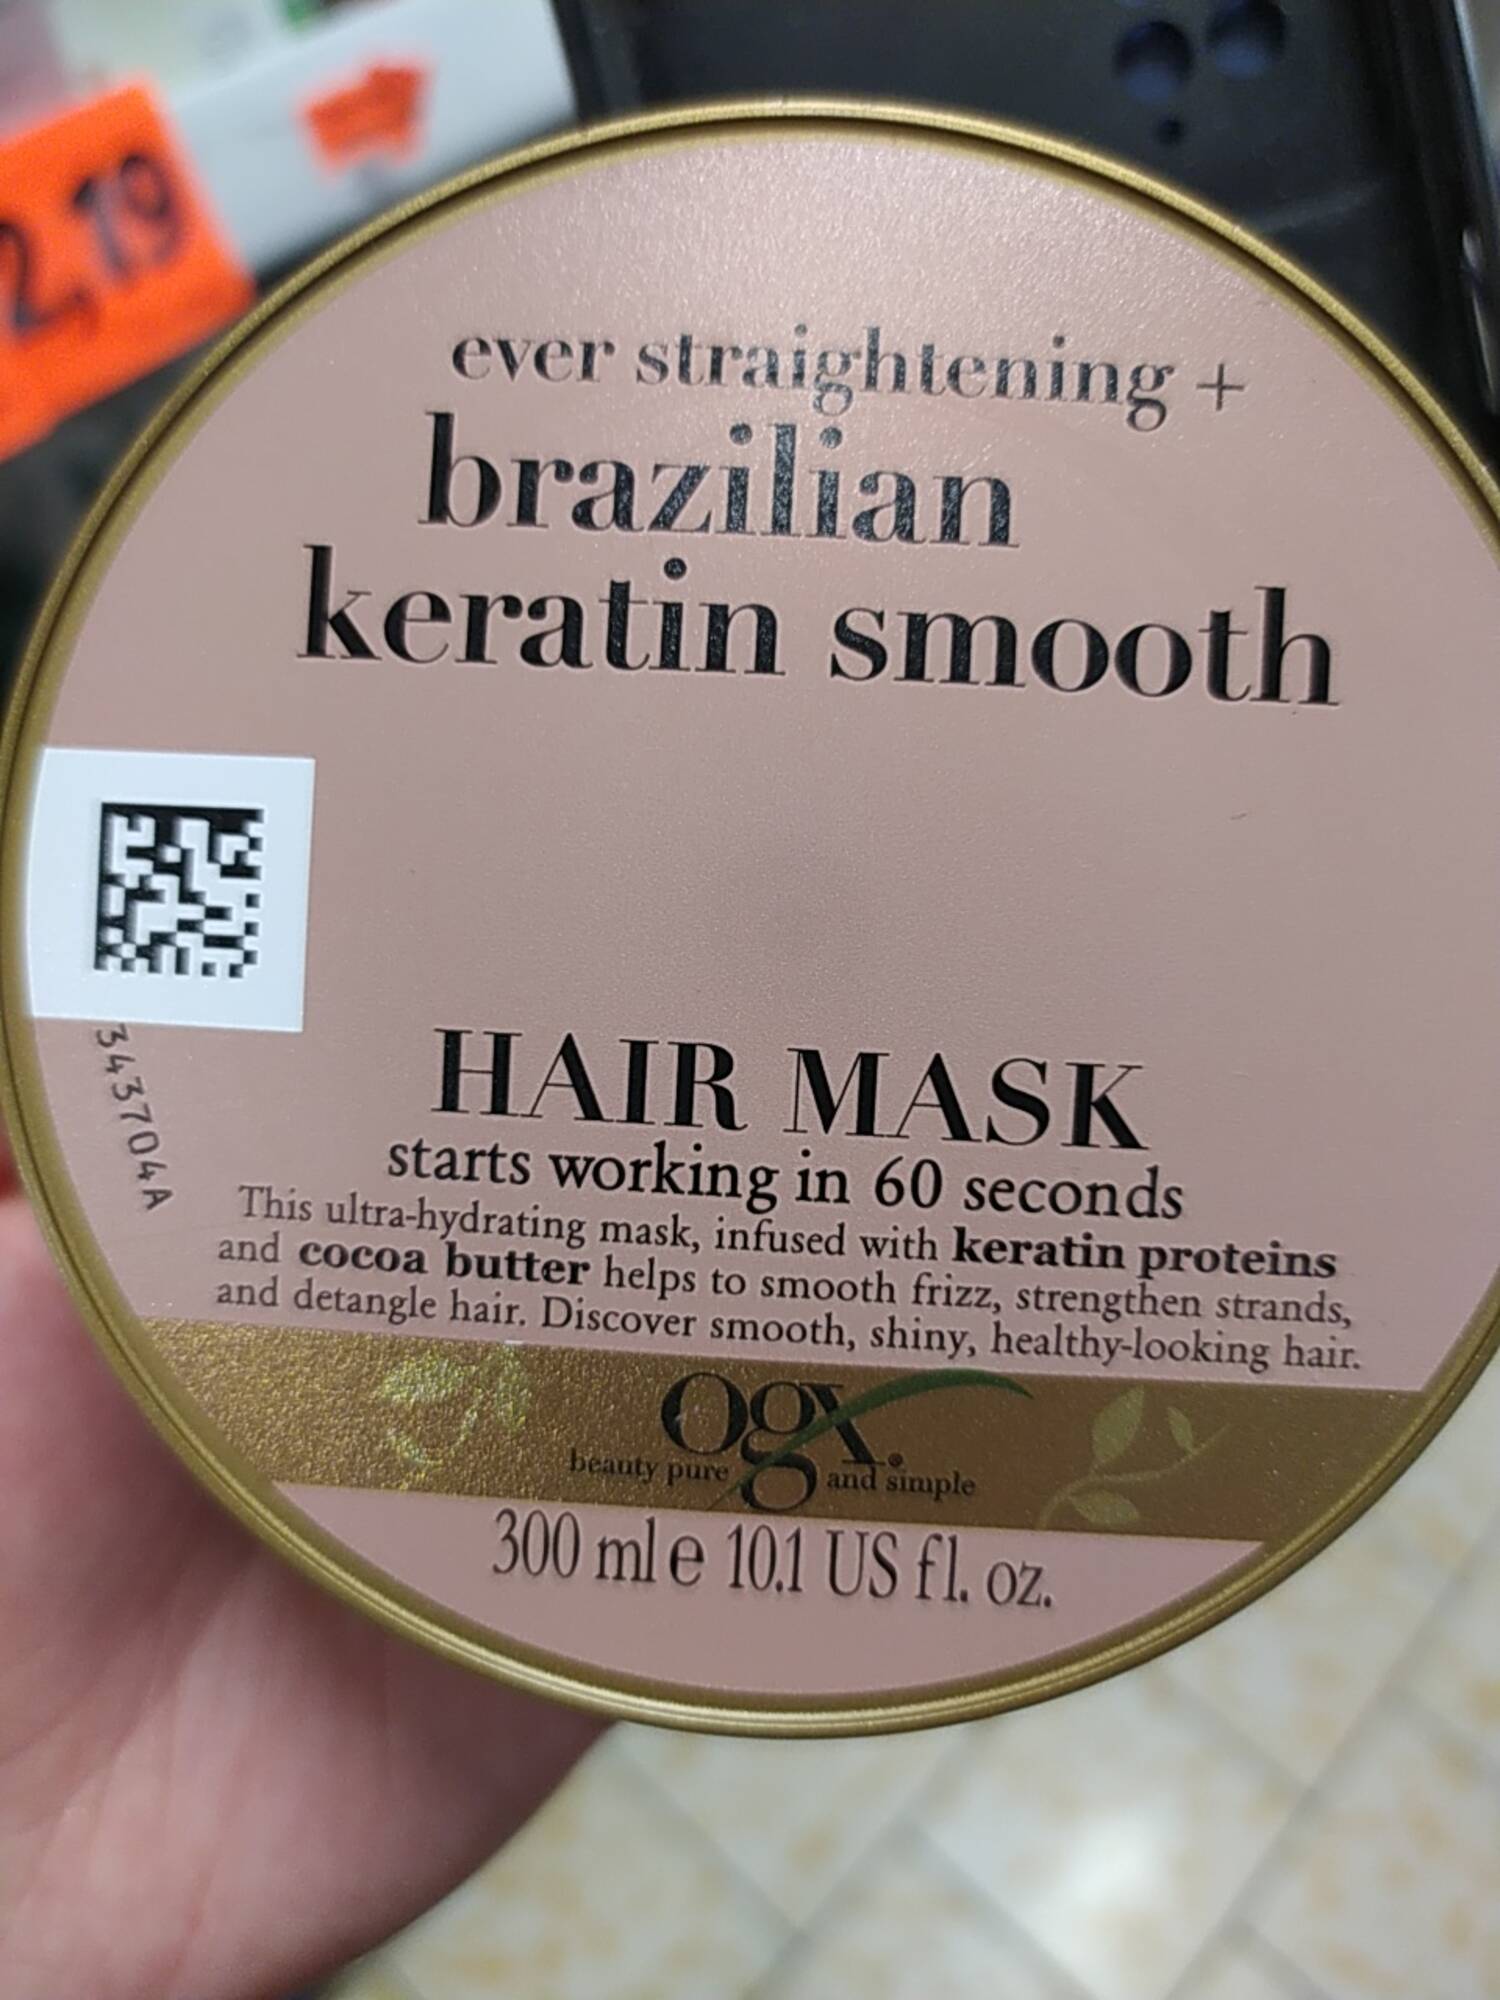 OGX - Brazilian keratin smooth - Hair mask